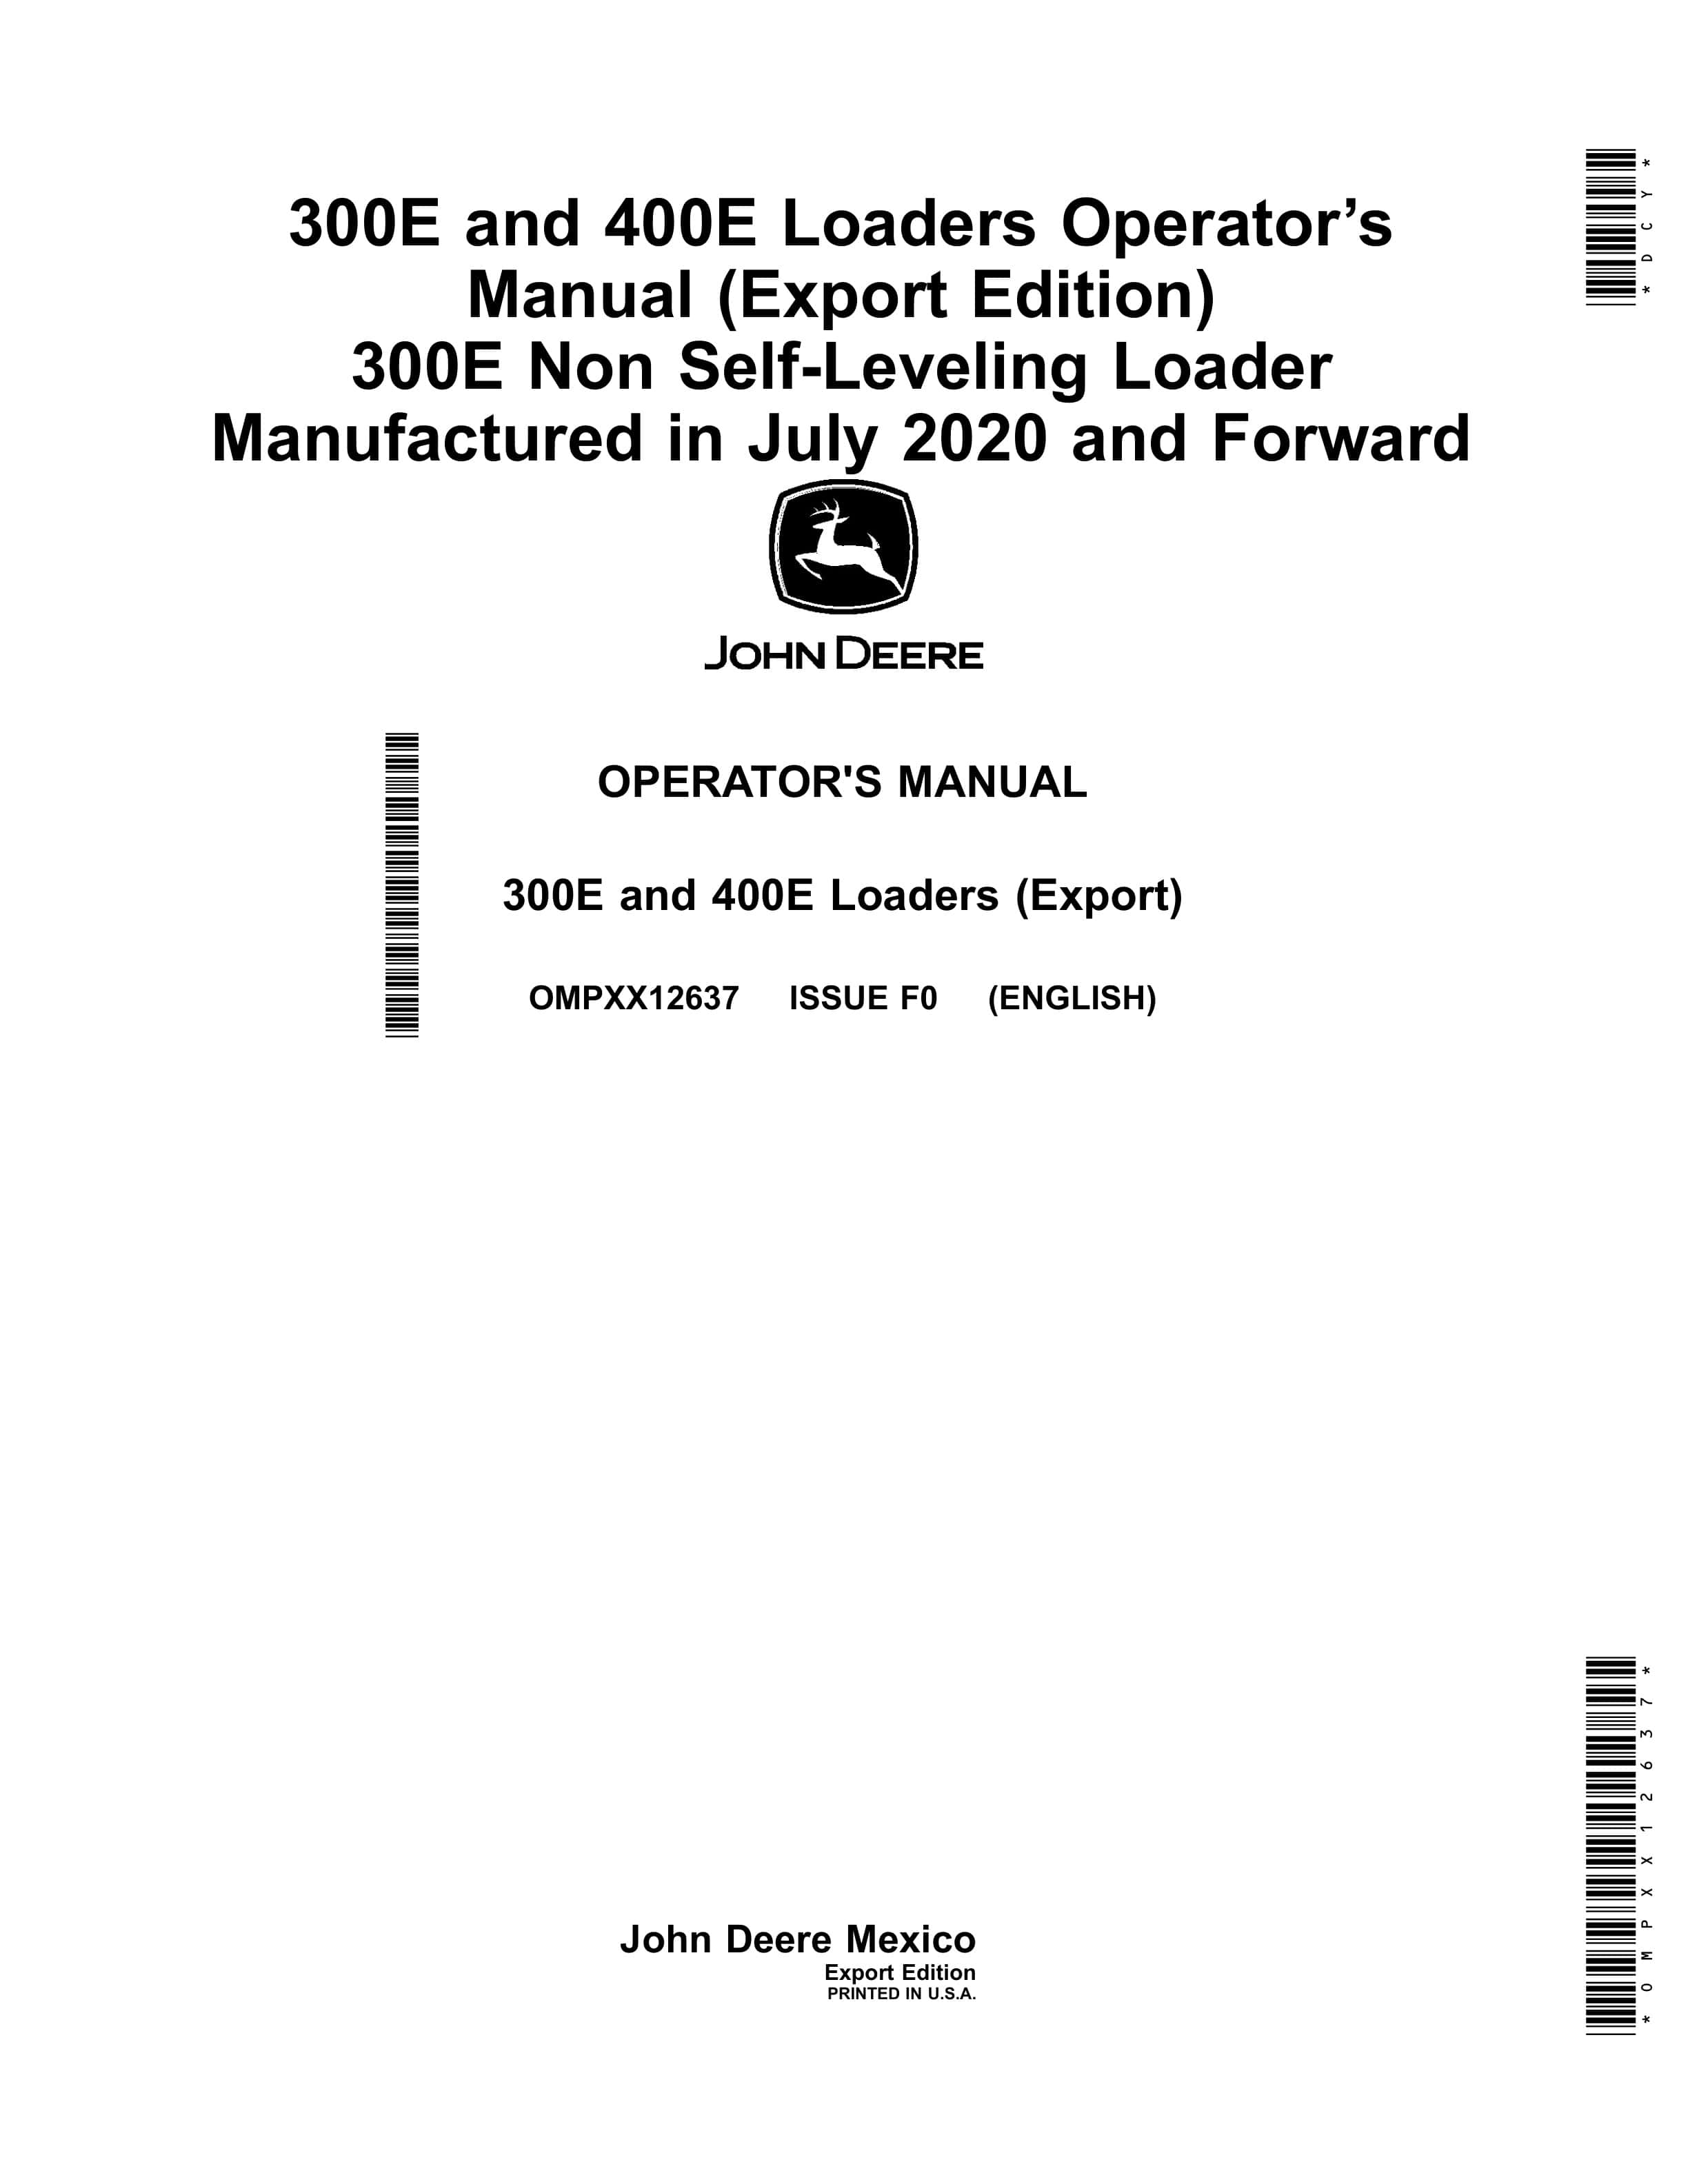 John Deere 300E and 400E Loader Operator Manual OMPXX12637 1